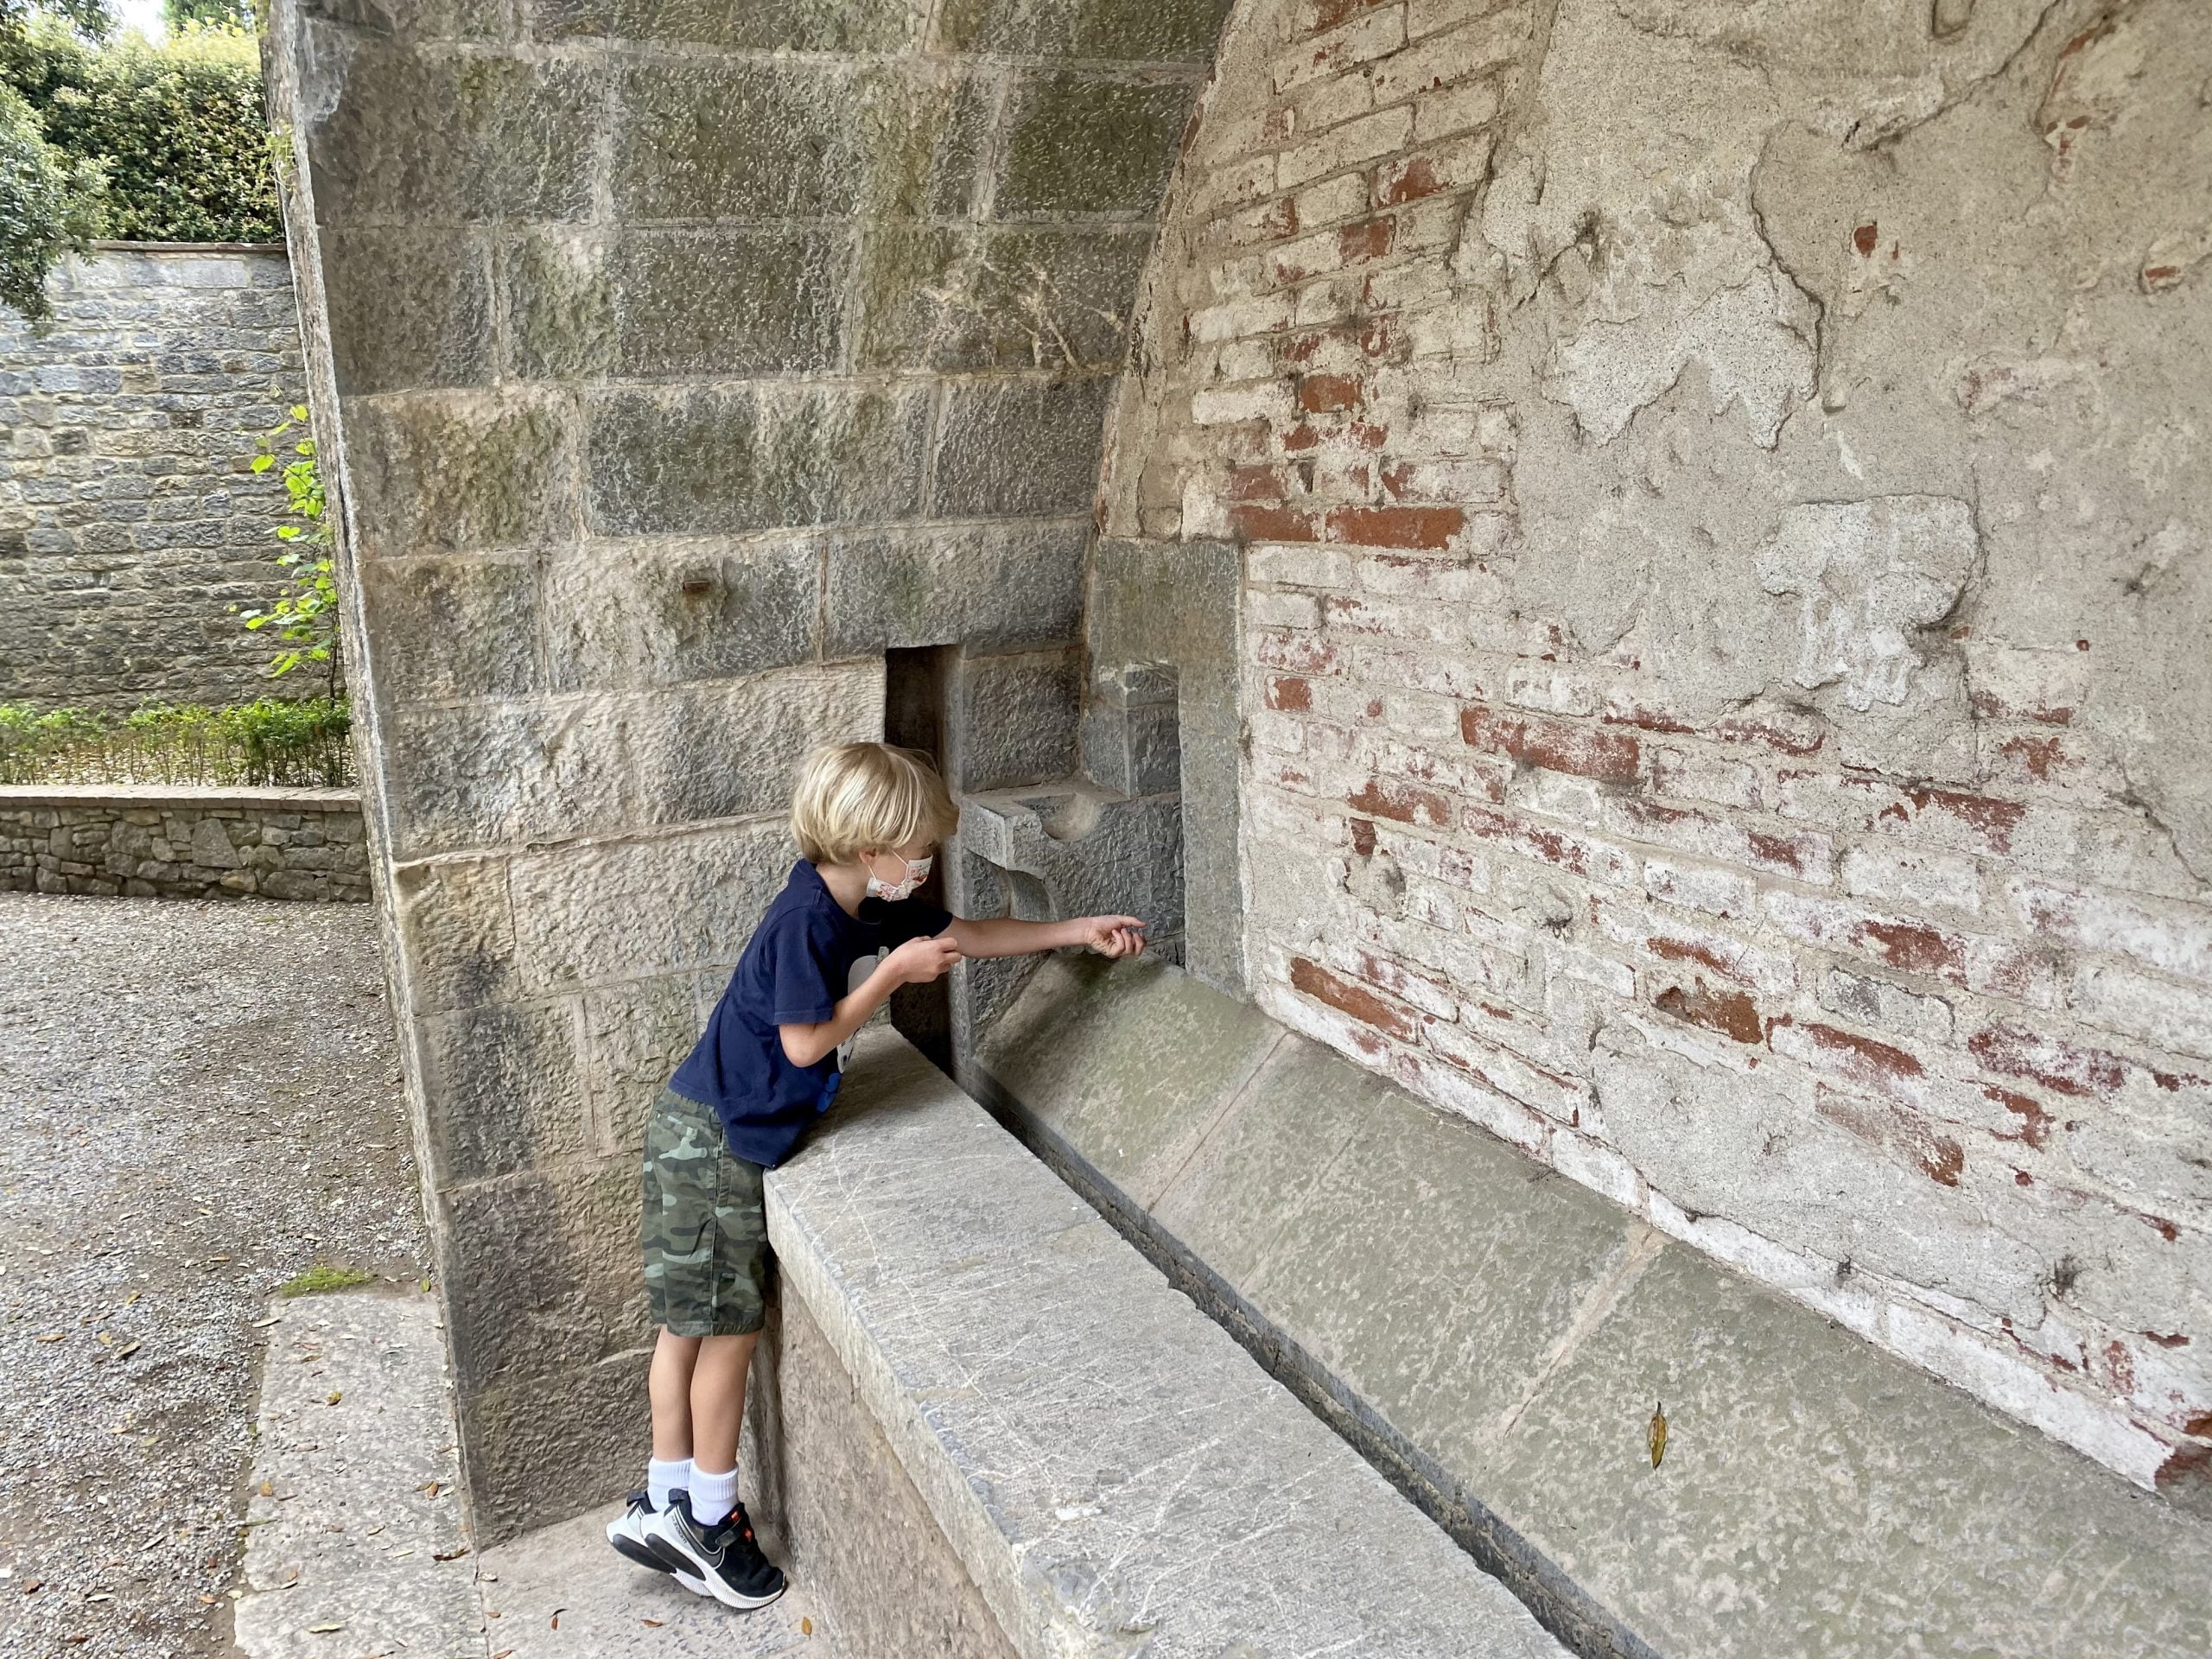 Little boy pretending to shoot at arrow through a narrow slit in a wall at Castello di Brolio (Brolio Castle).